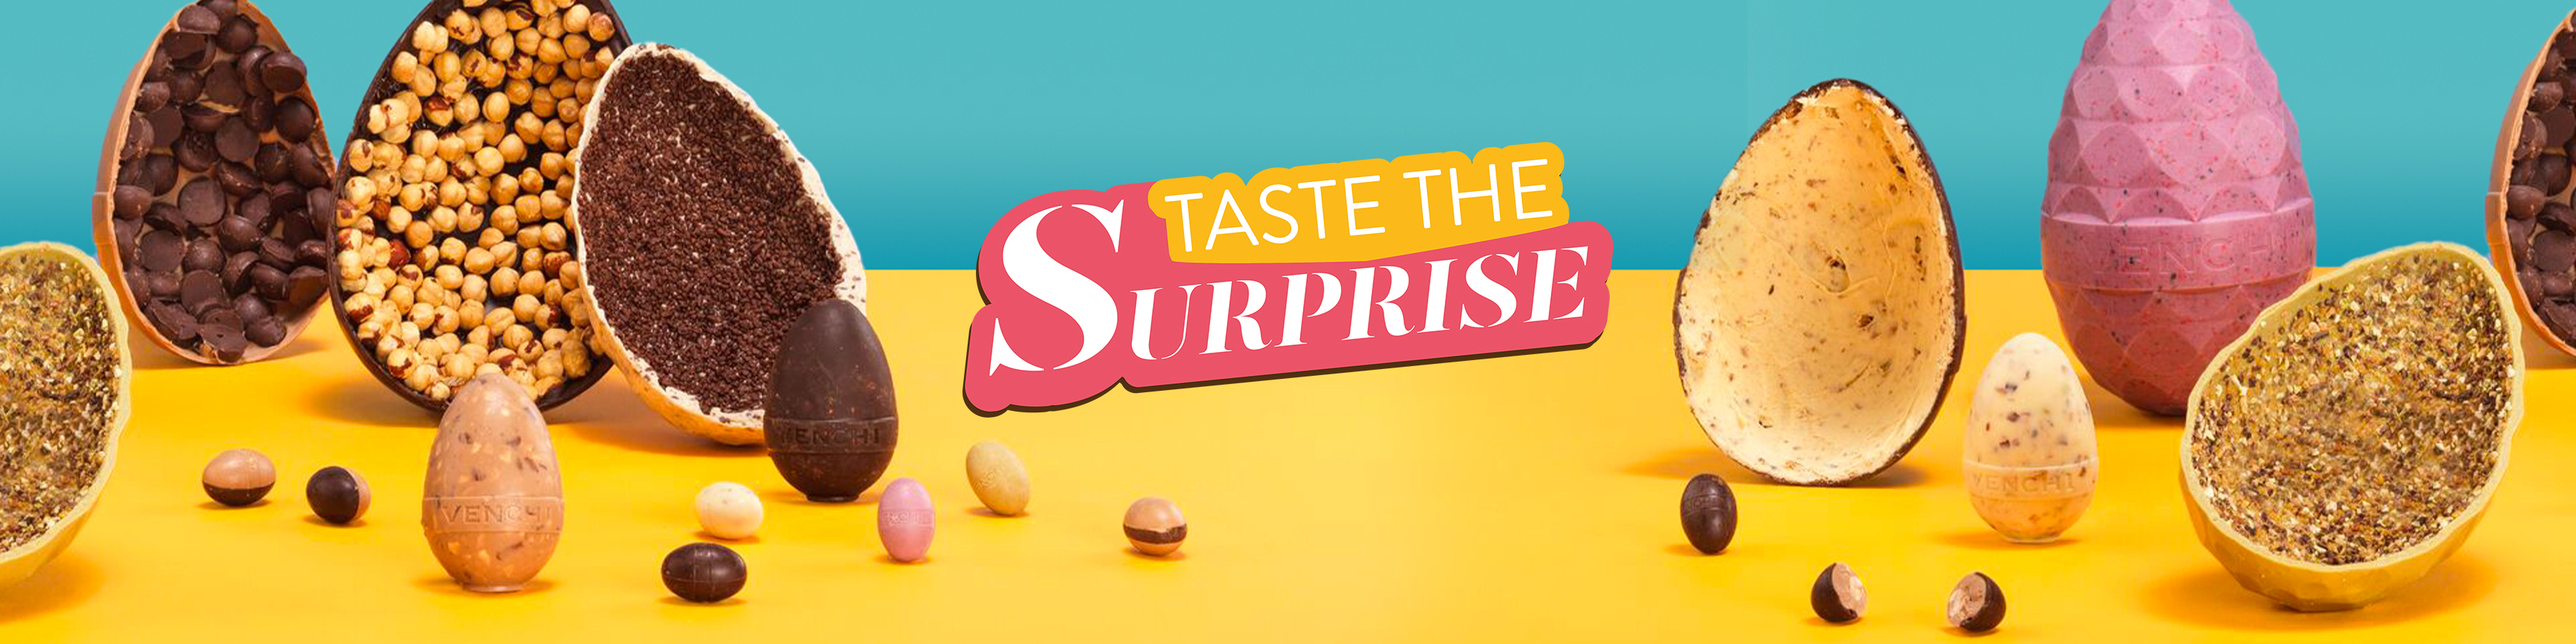 Taste the Surprise